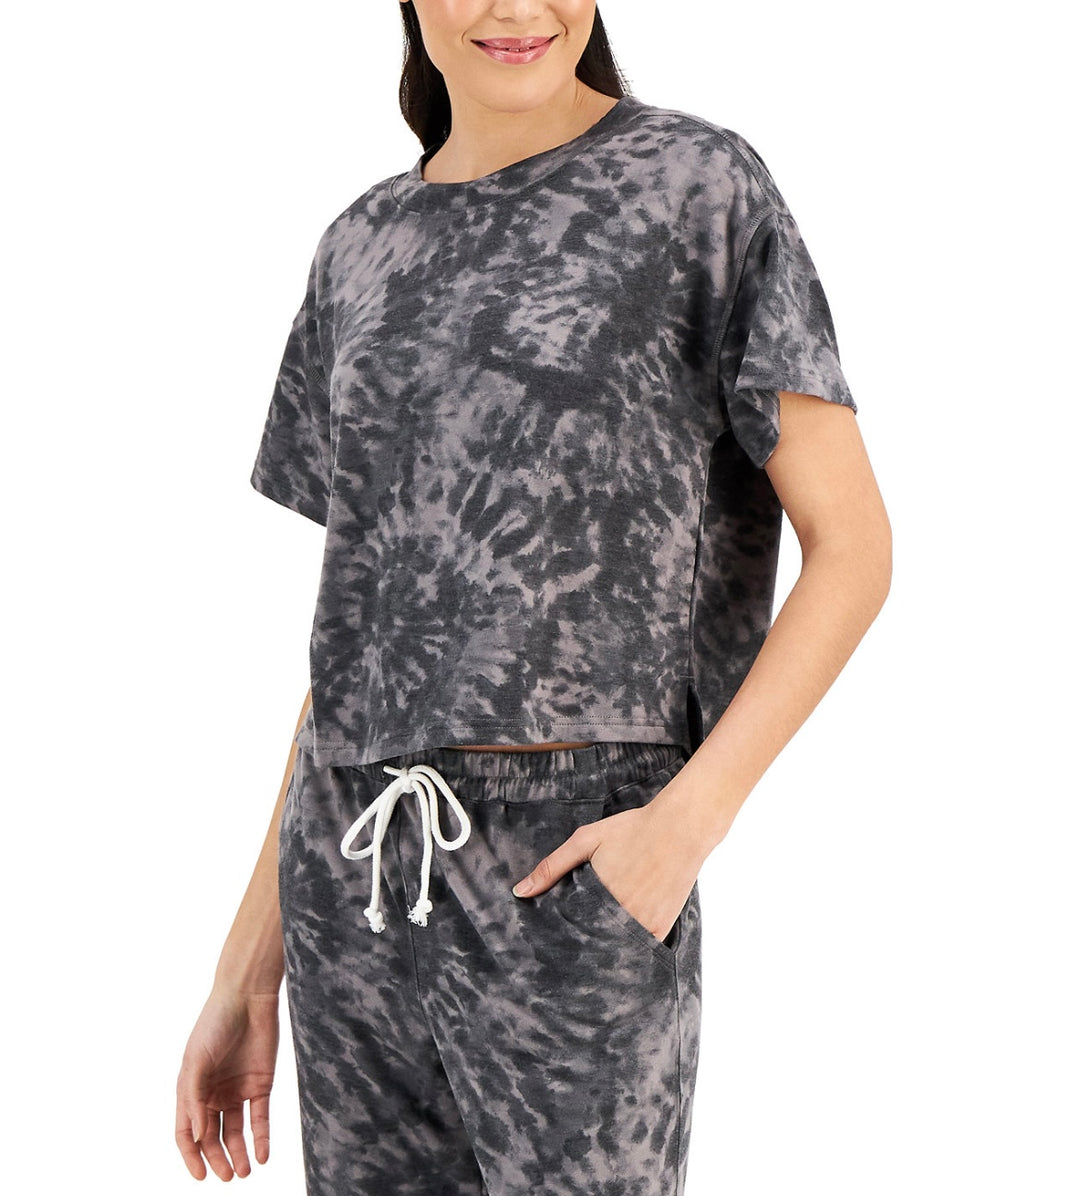 Jenni Women's Super Soft Pajama T-Shirt Grey Swirl Tiedye